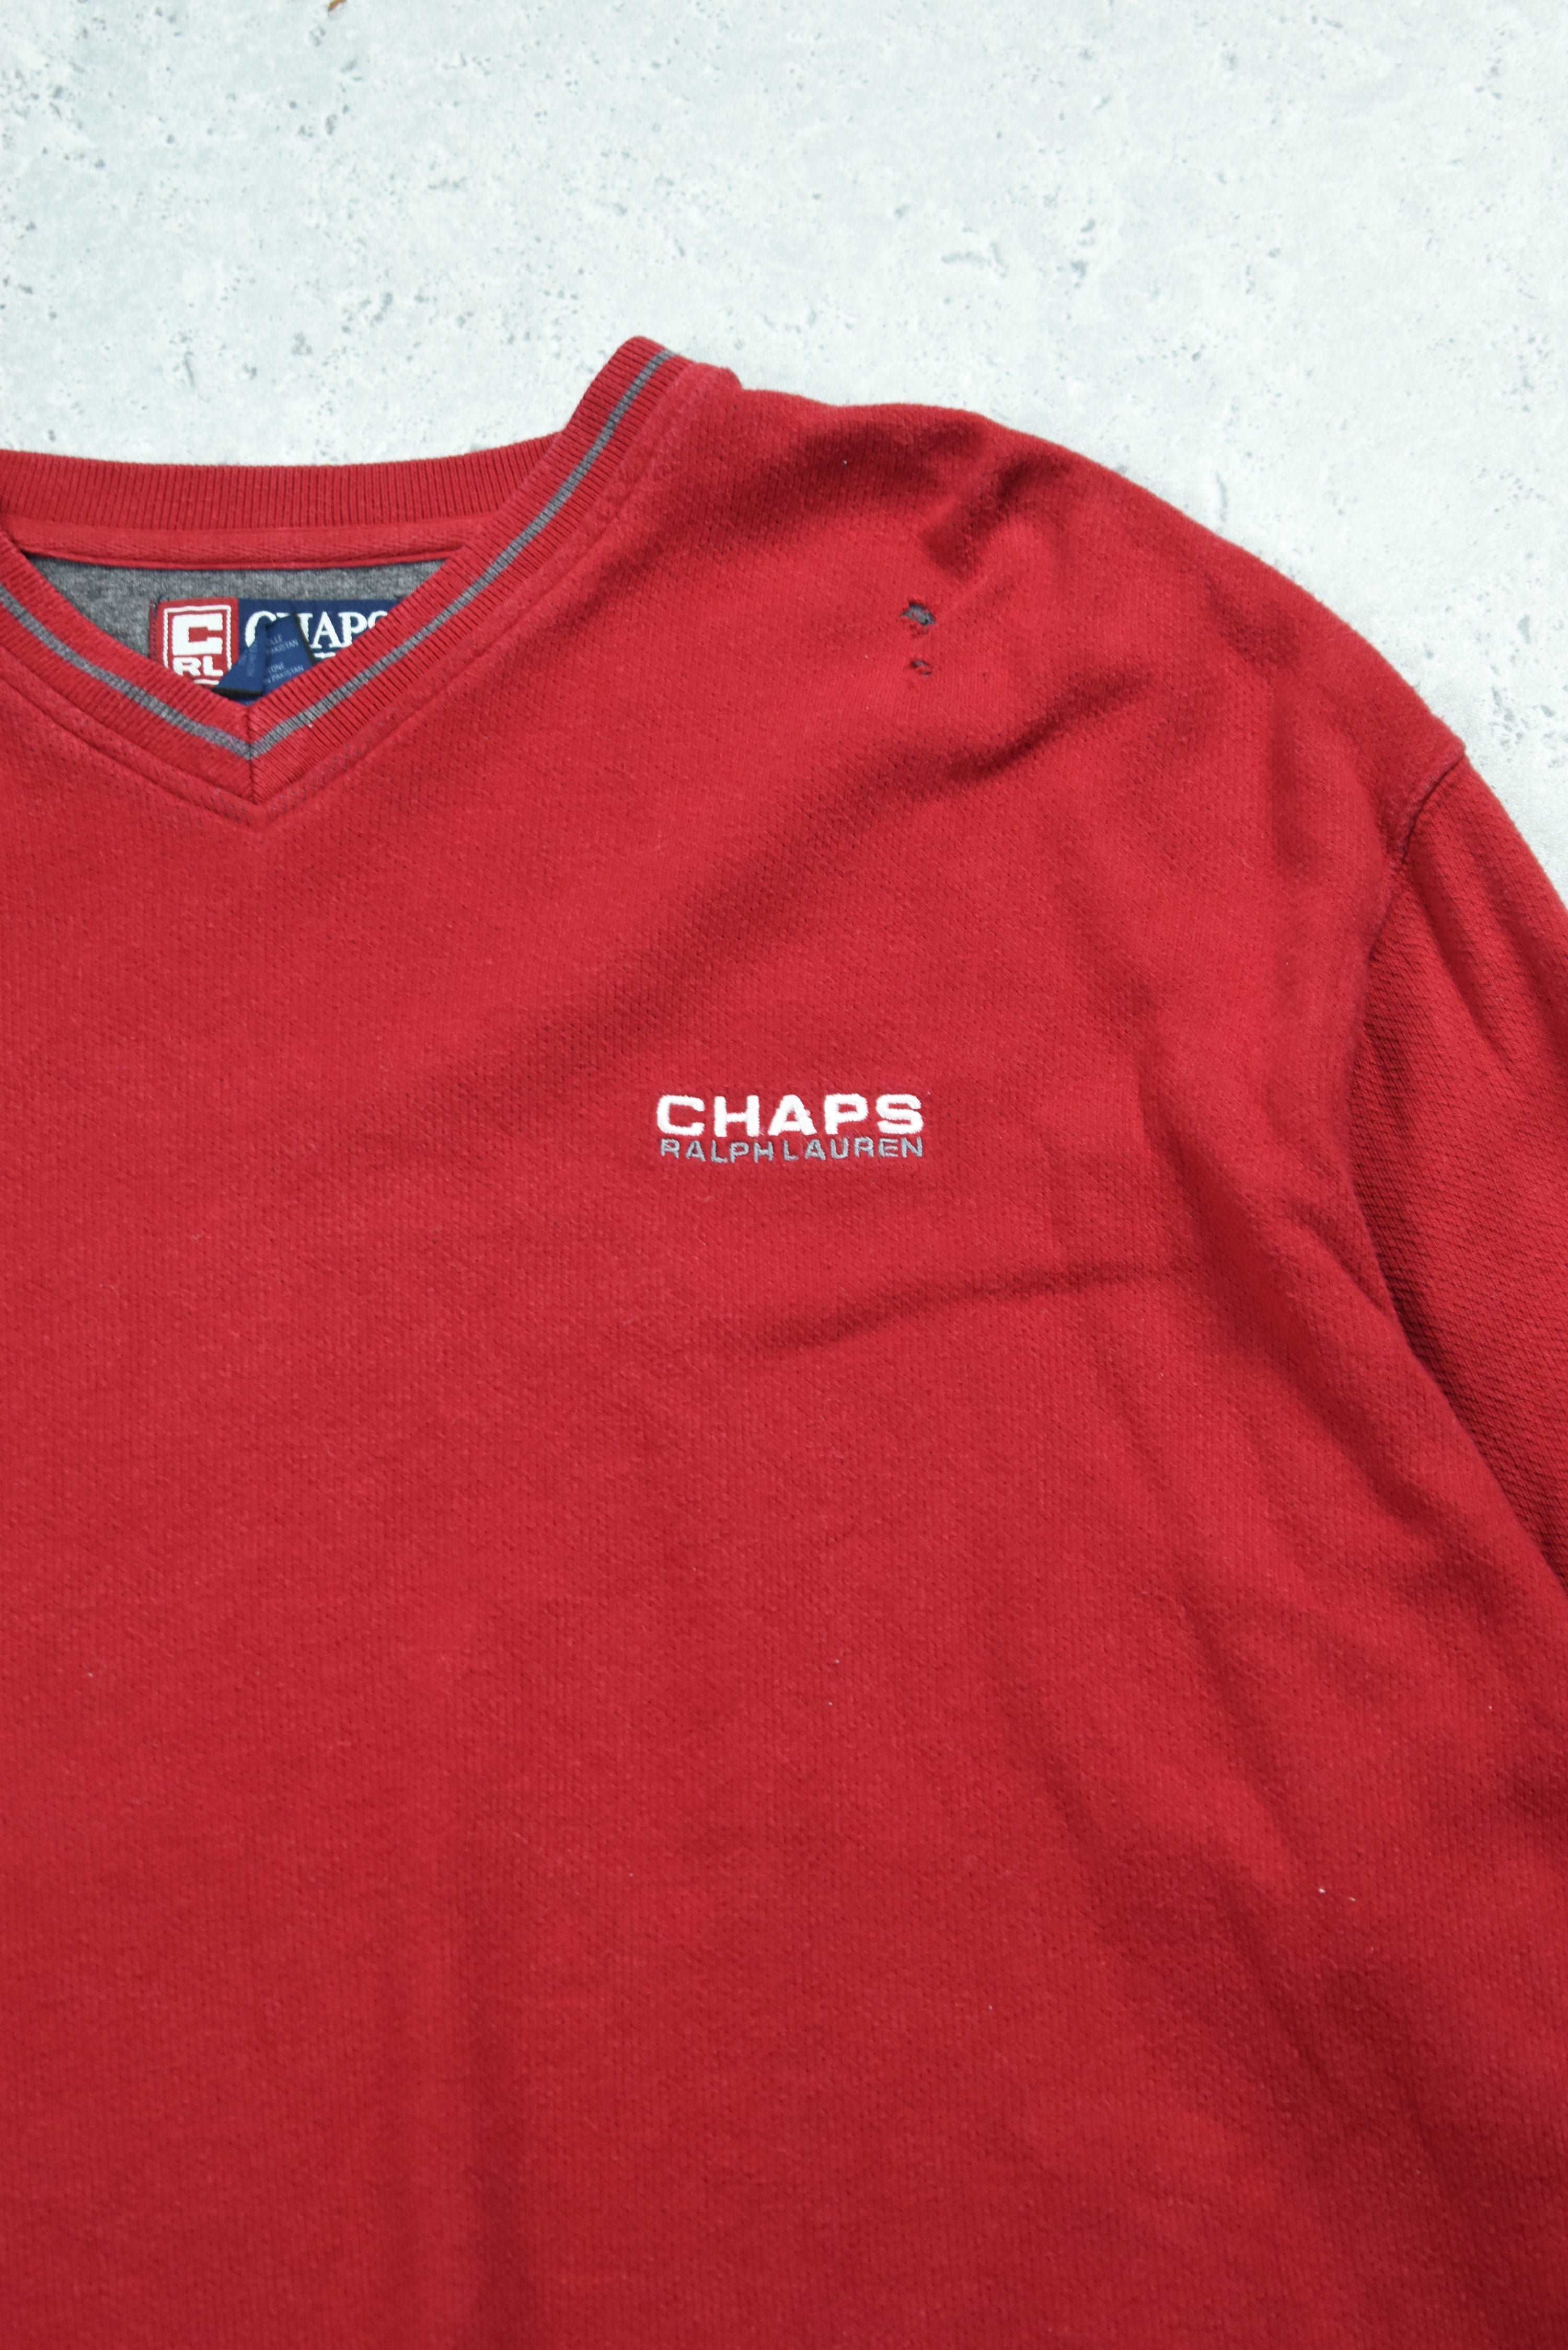 Vintage Chaps Ralph Lauren Embroidered Sweater XXL